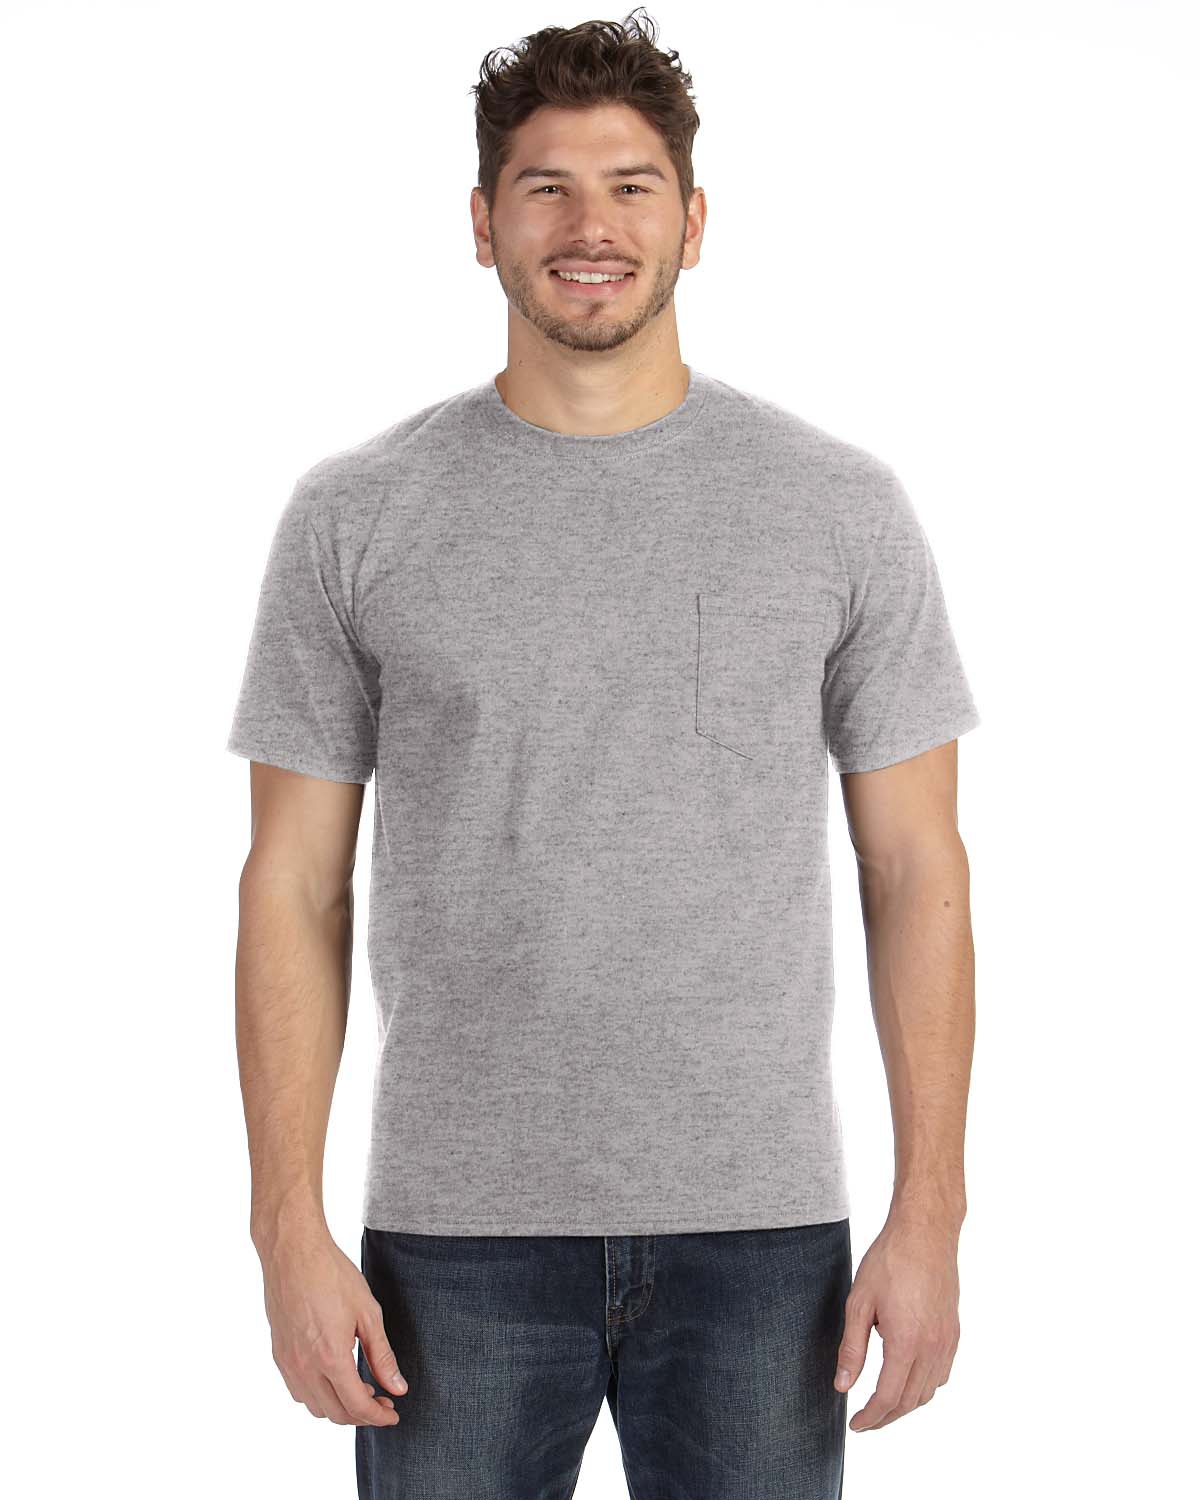 'Anvil 783AN Adult Midweight Pocket T-Shirt'